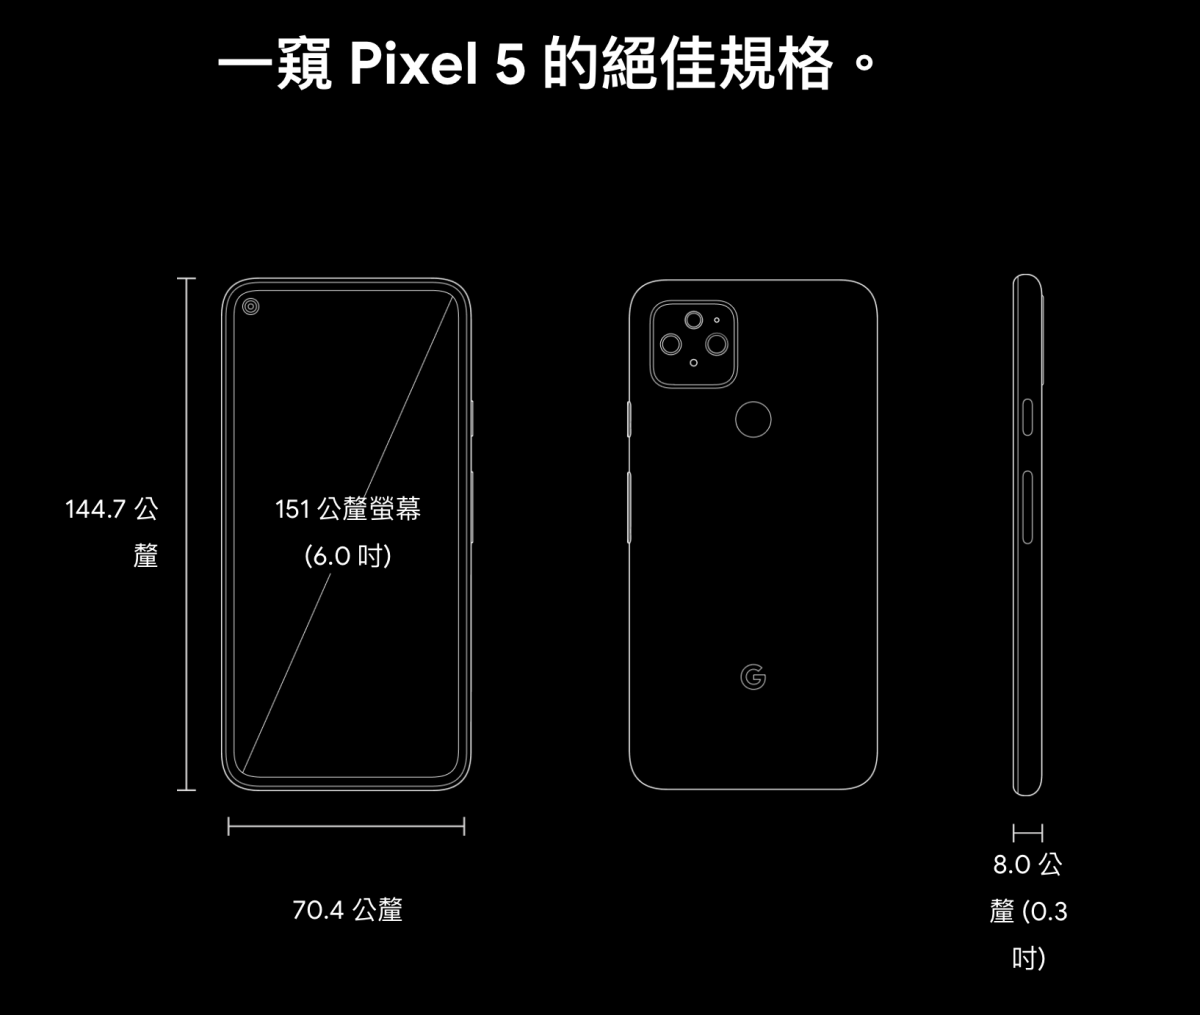 Google Pixel 5 5G旗艦手機重點整理 - 這項「黑科技」只有 Google 做到 - Pixel, Pixel 5, Pixel 5 上市, Pixel 5 推薦, Pixel 5 發表, Pixel 5 購買, Pixel 5上市, Pixel 5推薦, Pixel 5發表, Pixel 5購買, Pixel 手機, Pixel 推薦, Pixel5, Pixel手機, Pixel推薦 - 科技生活 - teXch